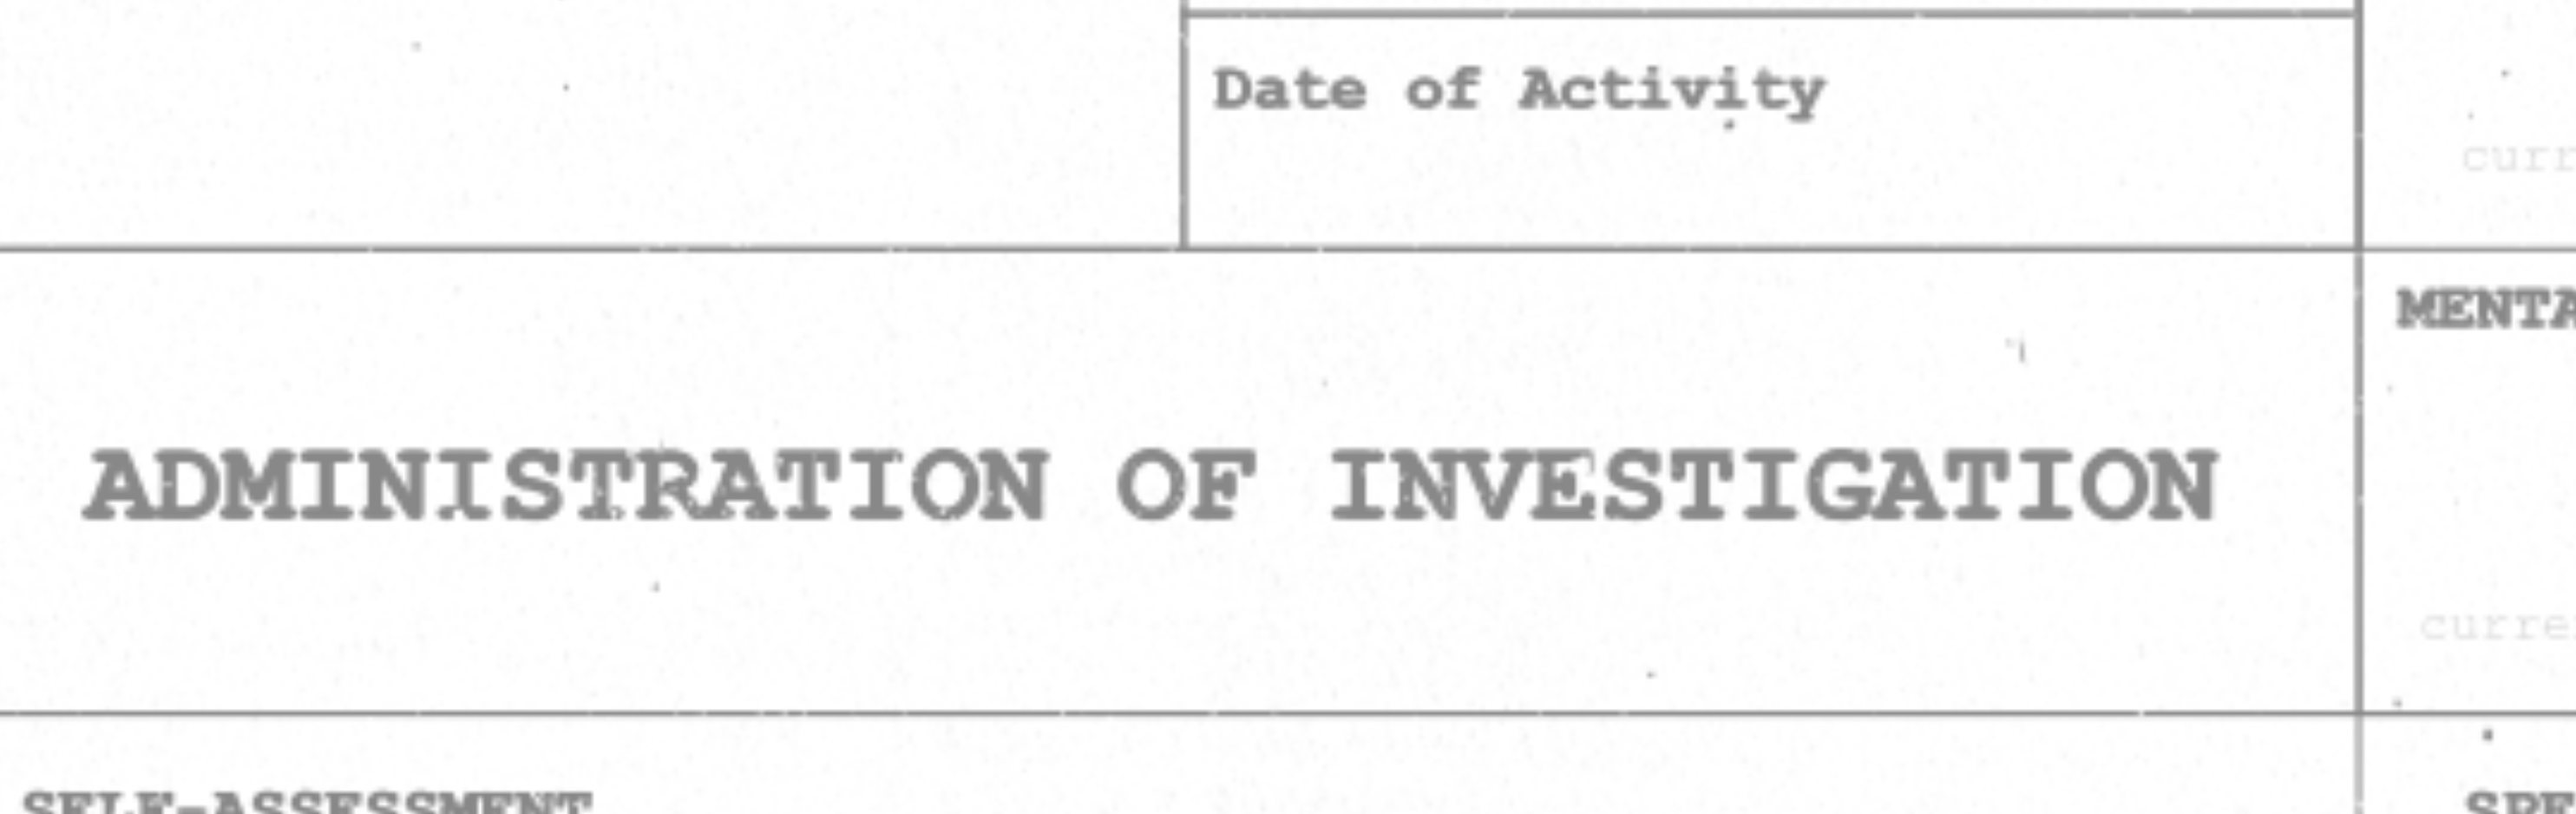 Administration of Investigation